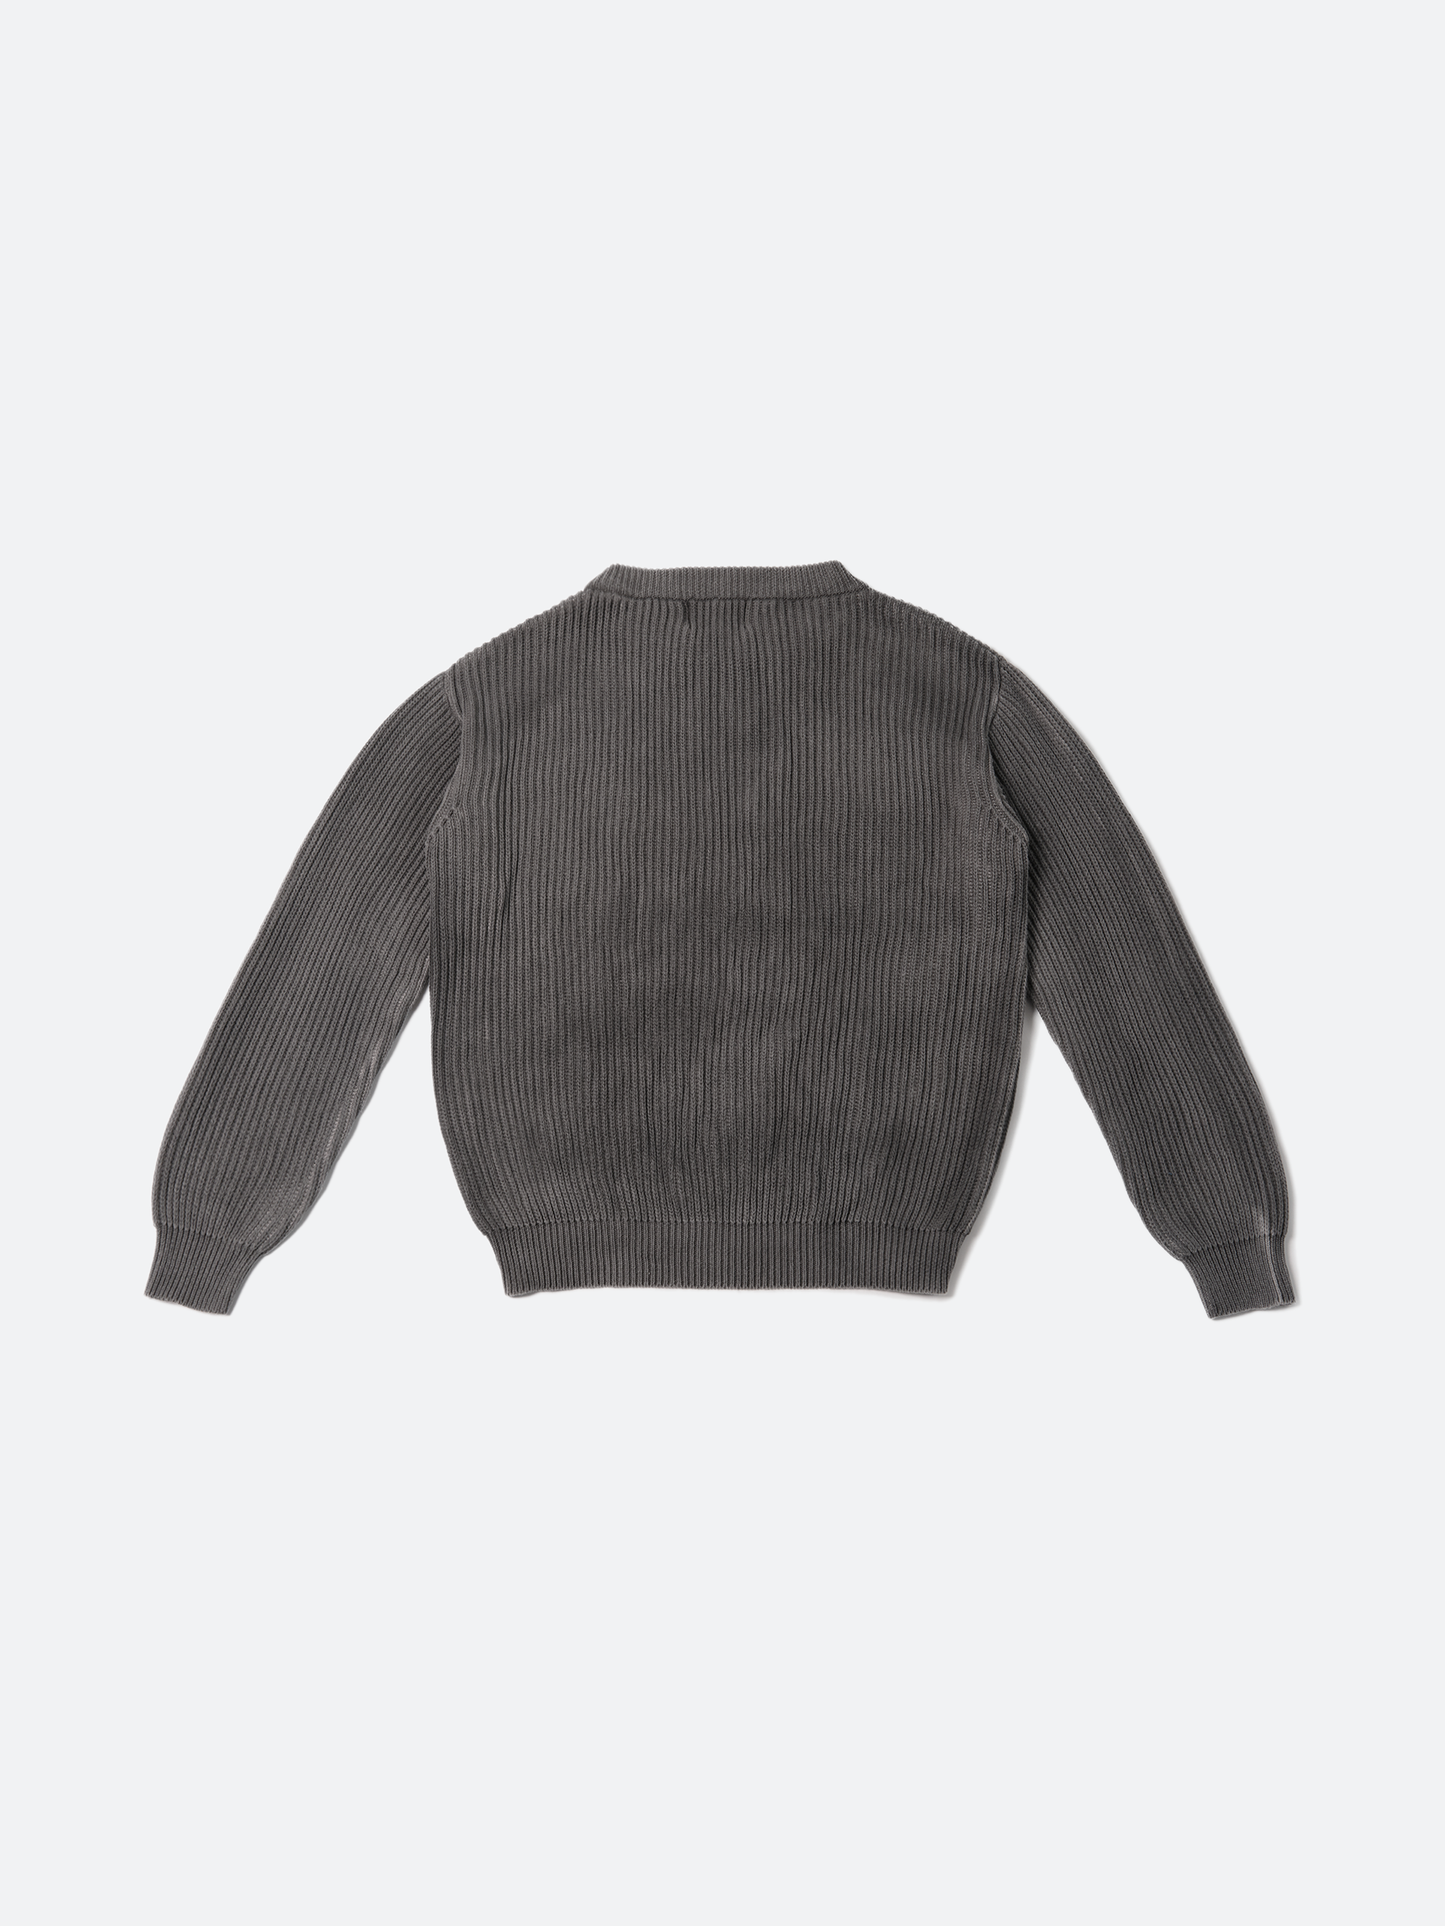 dark-dyed-knit-sweater-FRAGILE-CLUB-astoud